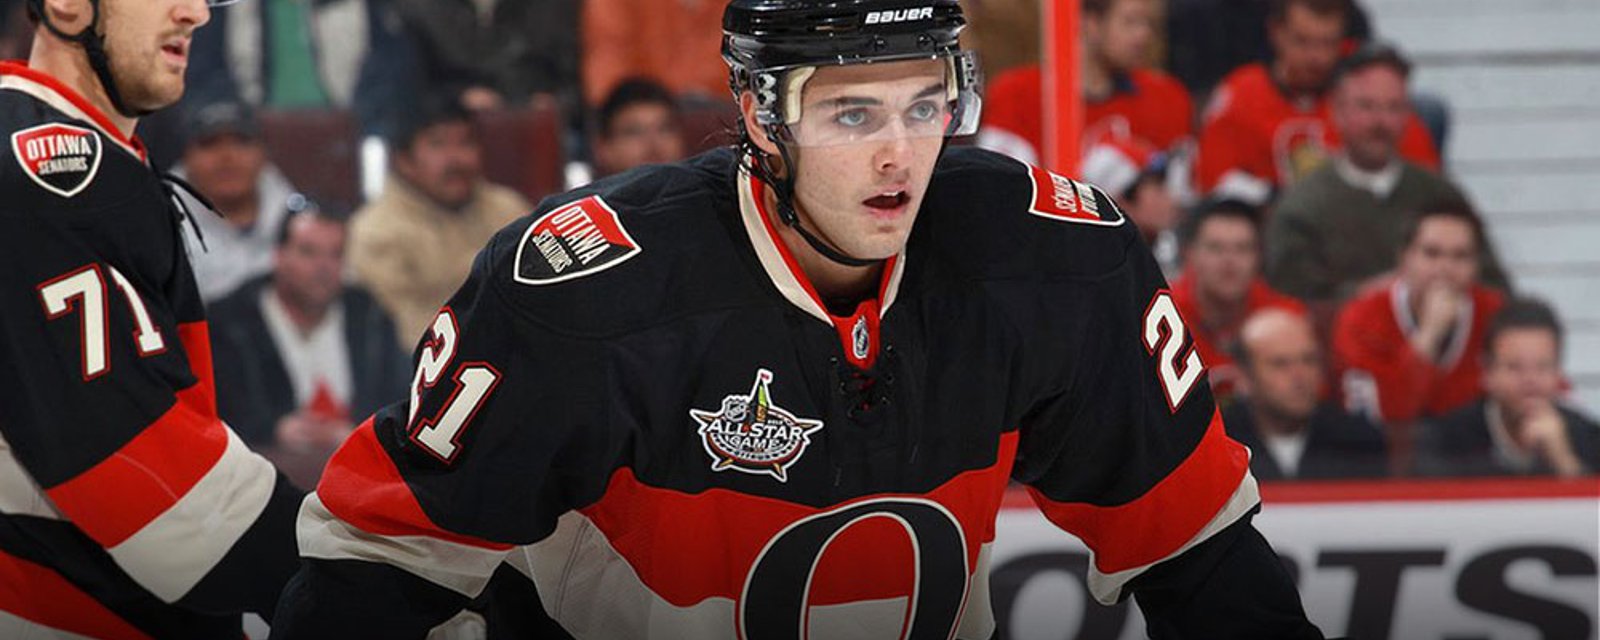 Former Sens prospect thrives in KHL